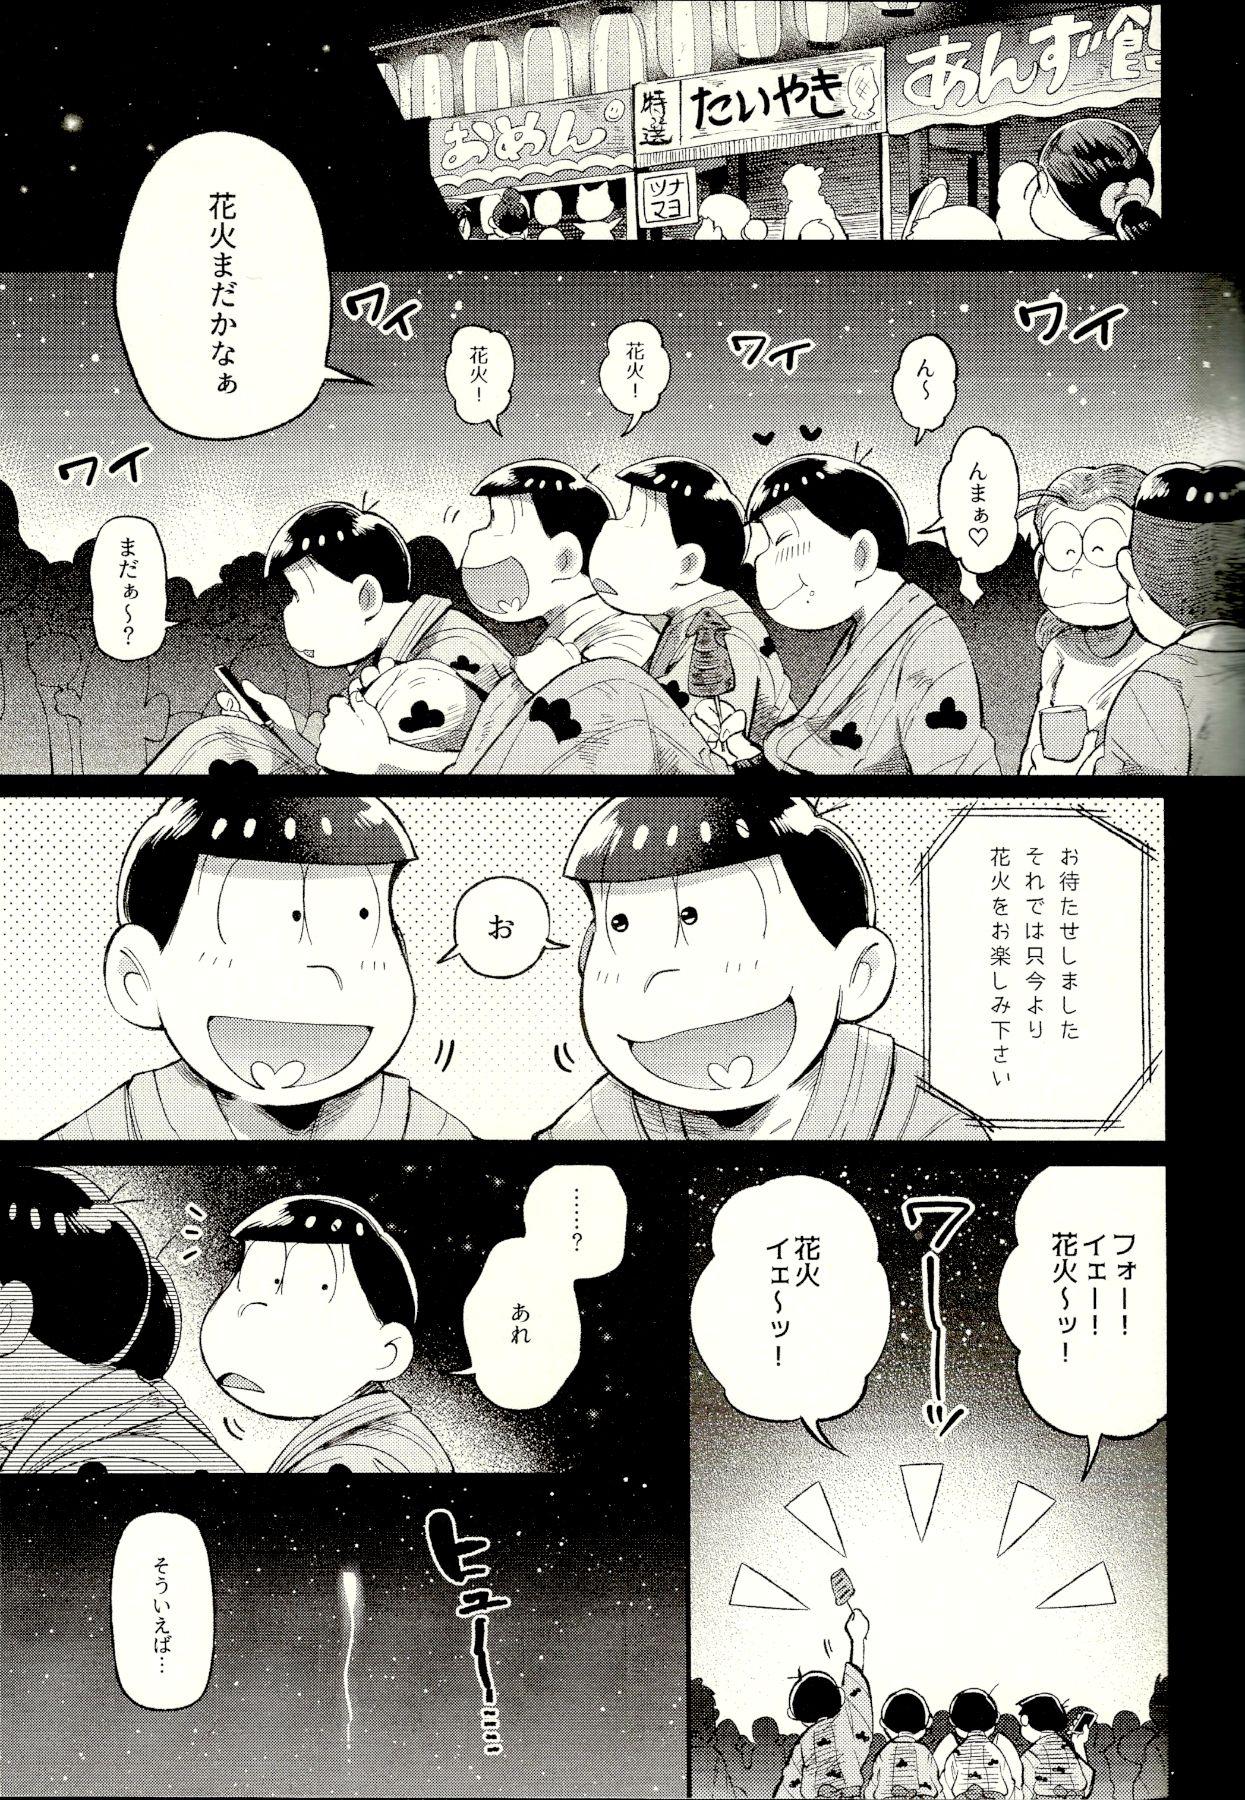 Puba Season in the Summer - Osomatsu-san Loira - Page 3